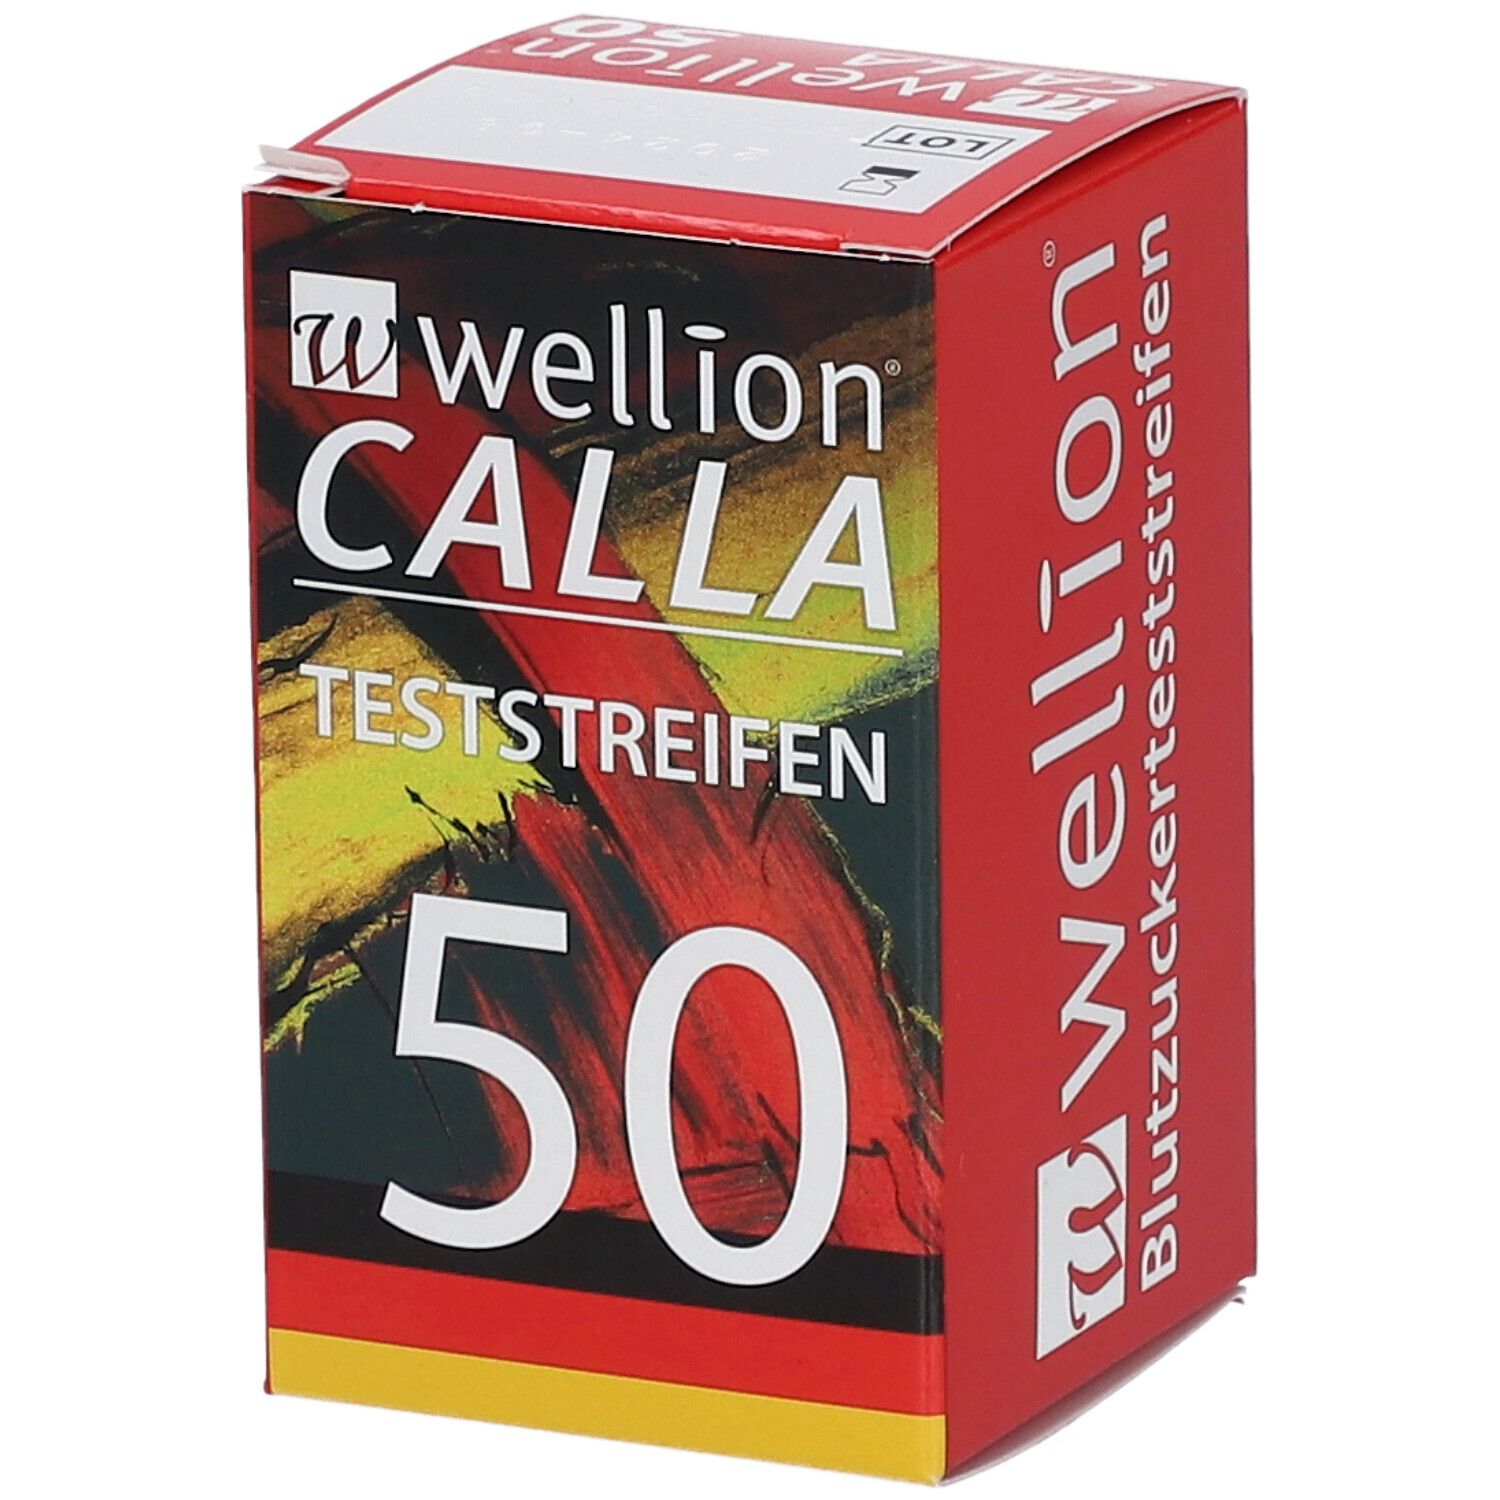 Wellion Calla blood sugar test strips